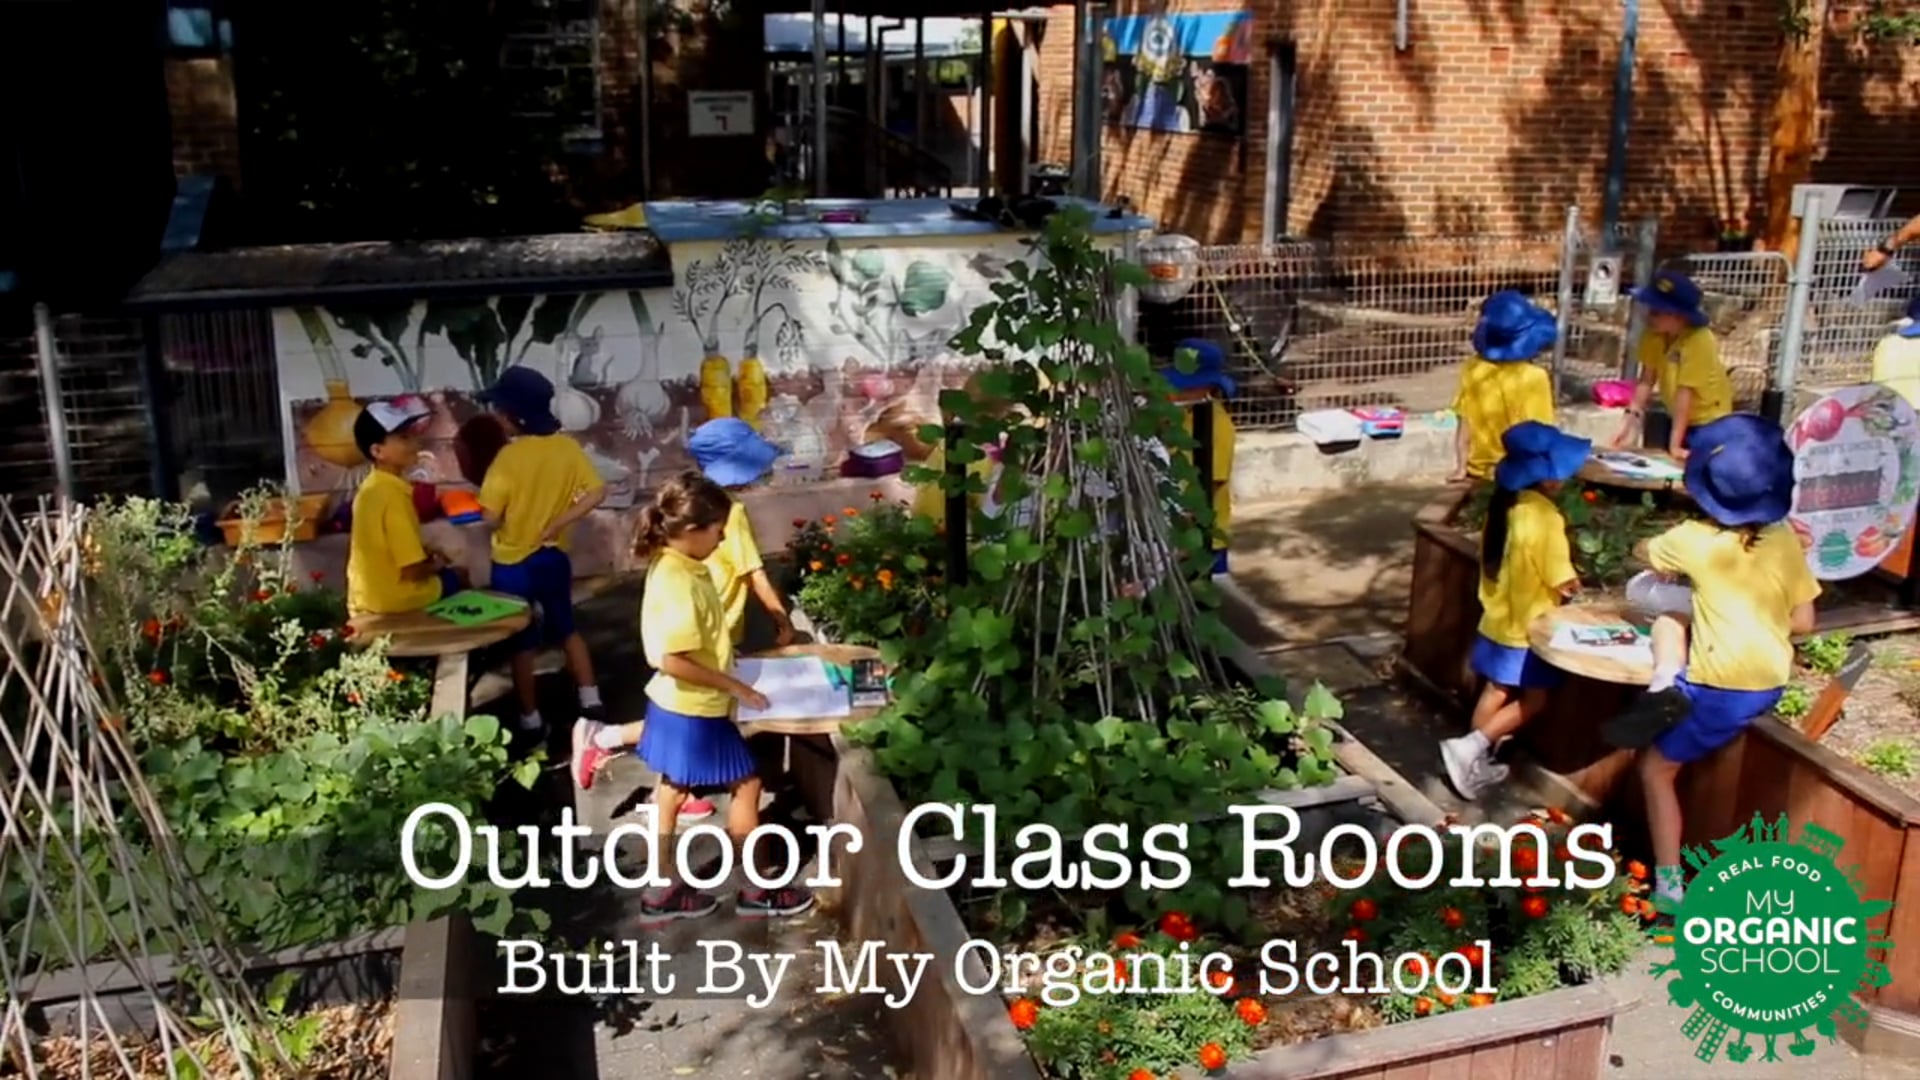 My Organic School Outdoor Classroom / Organic Vege Box Co-op Initiative.